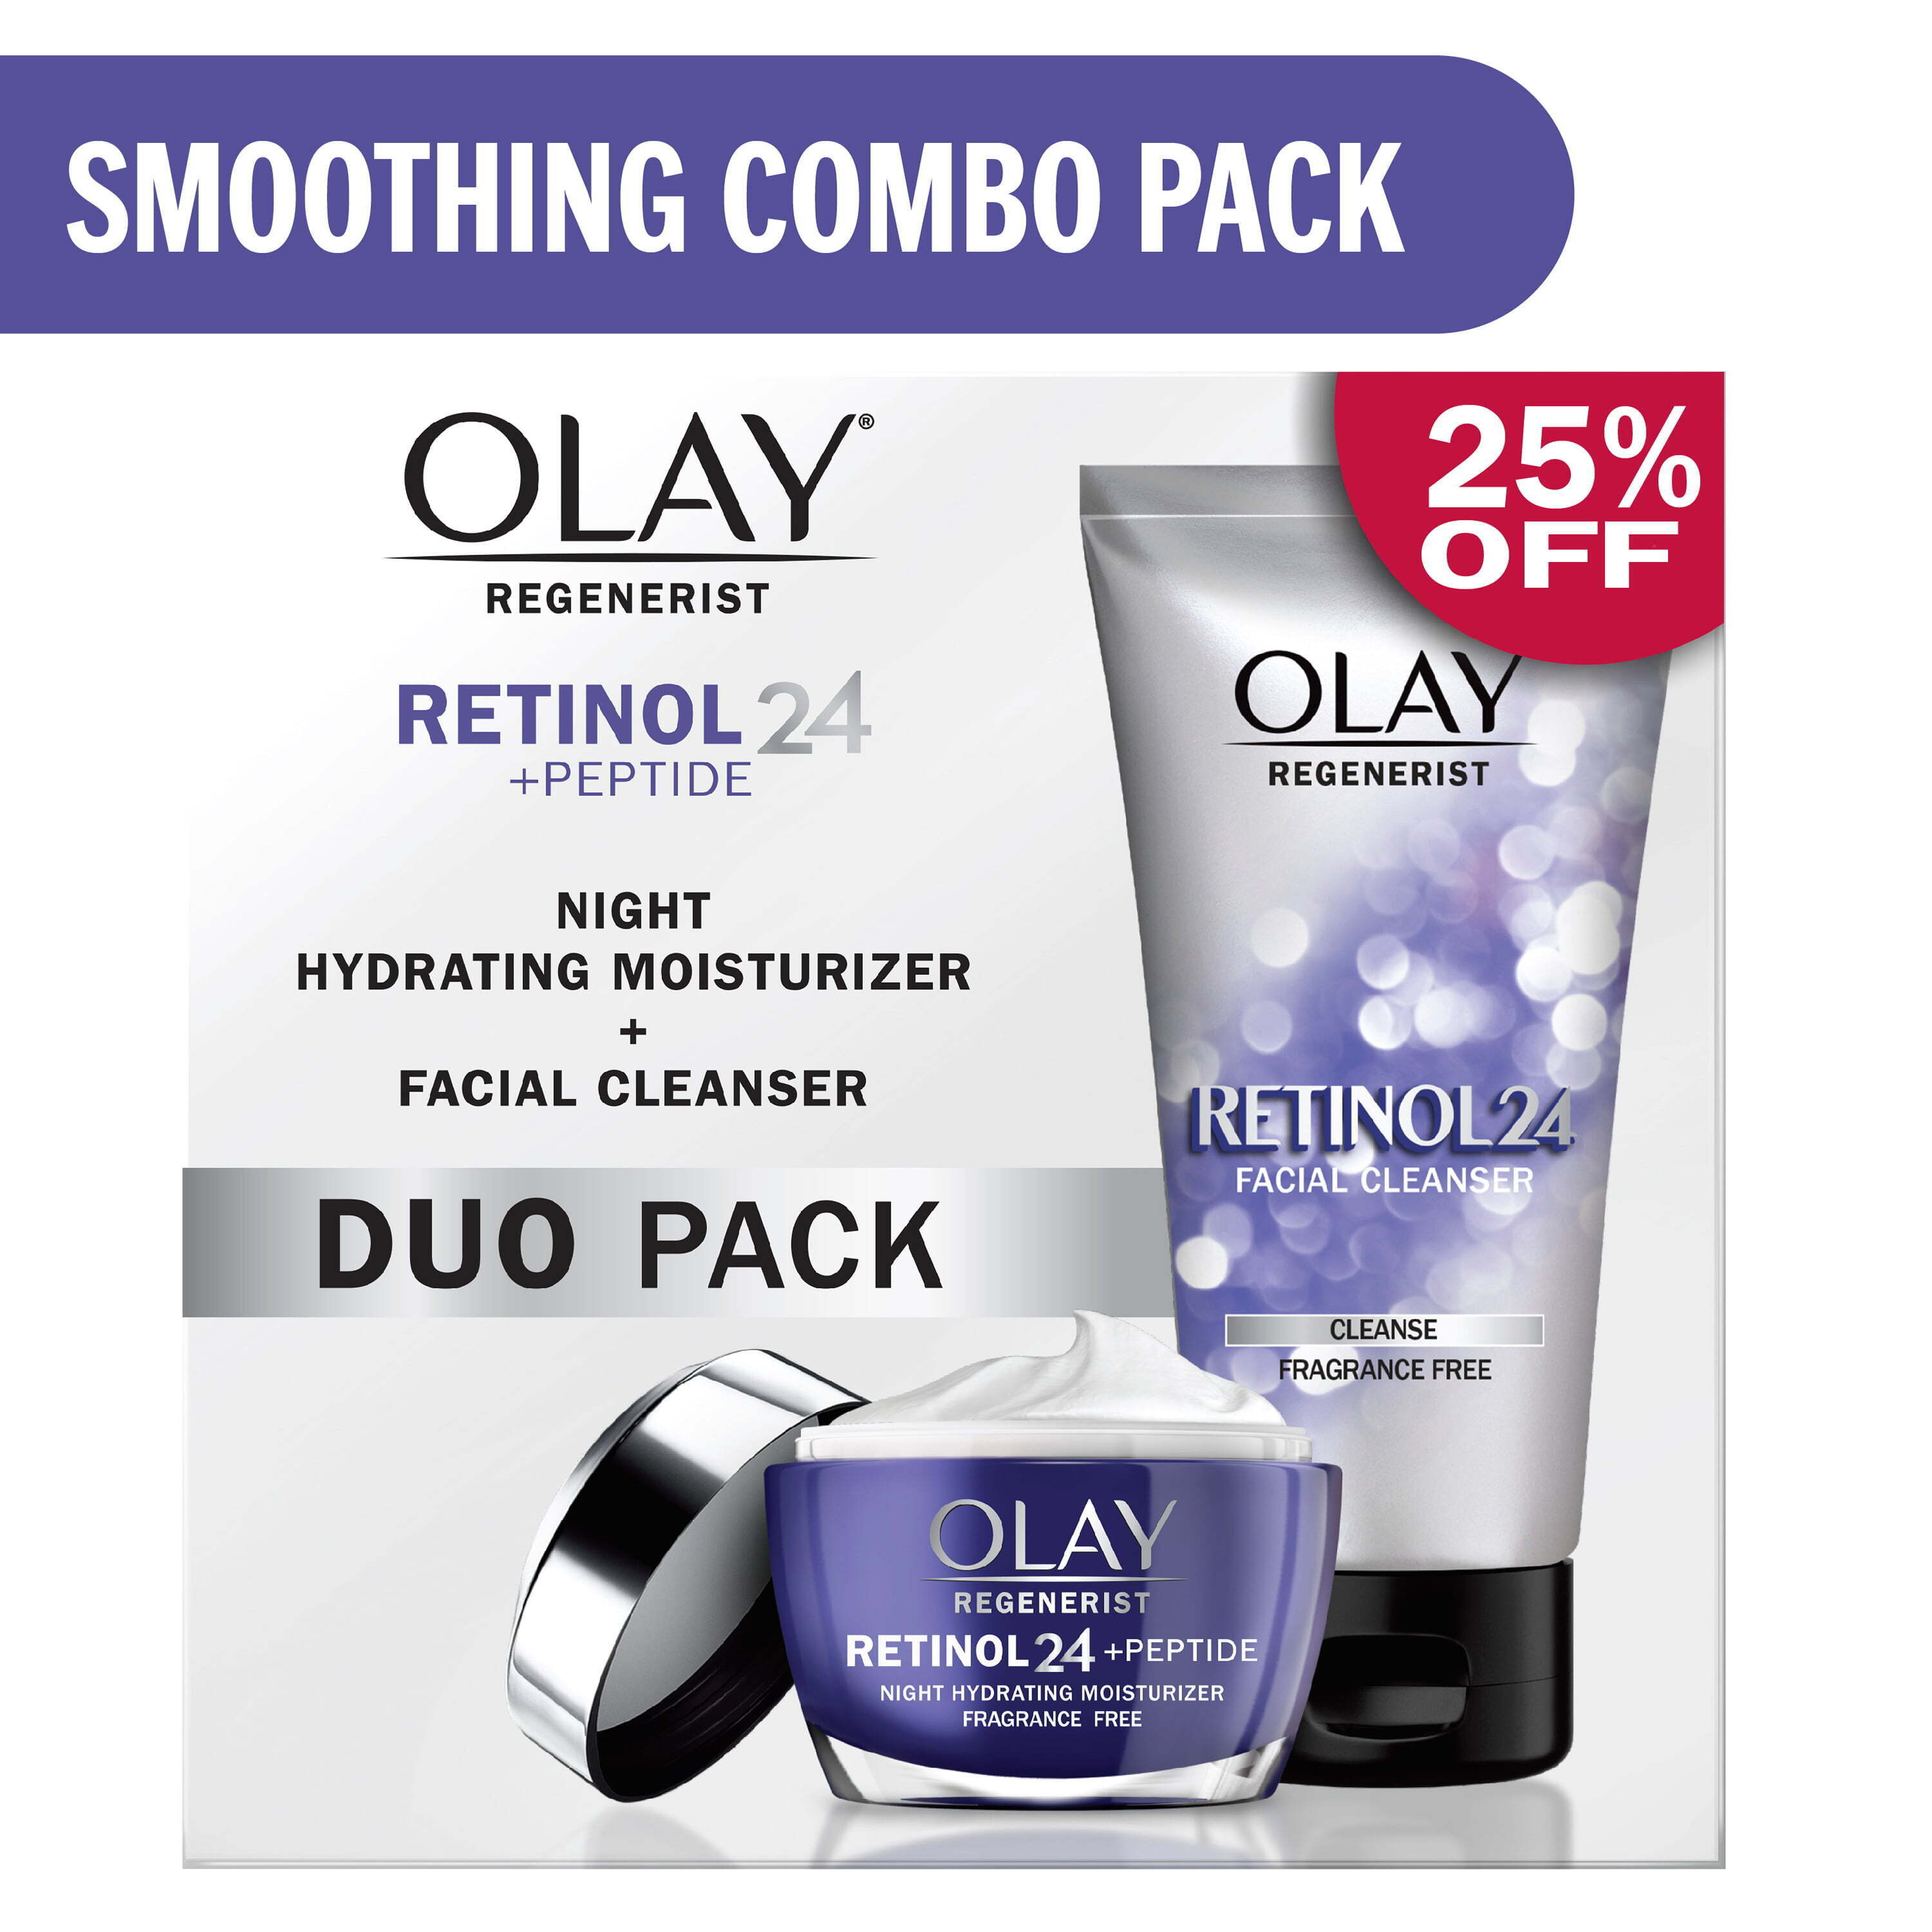 Olay Retinol 24 Cleanser + Moisturizer Duo Pack